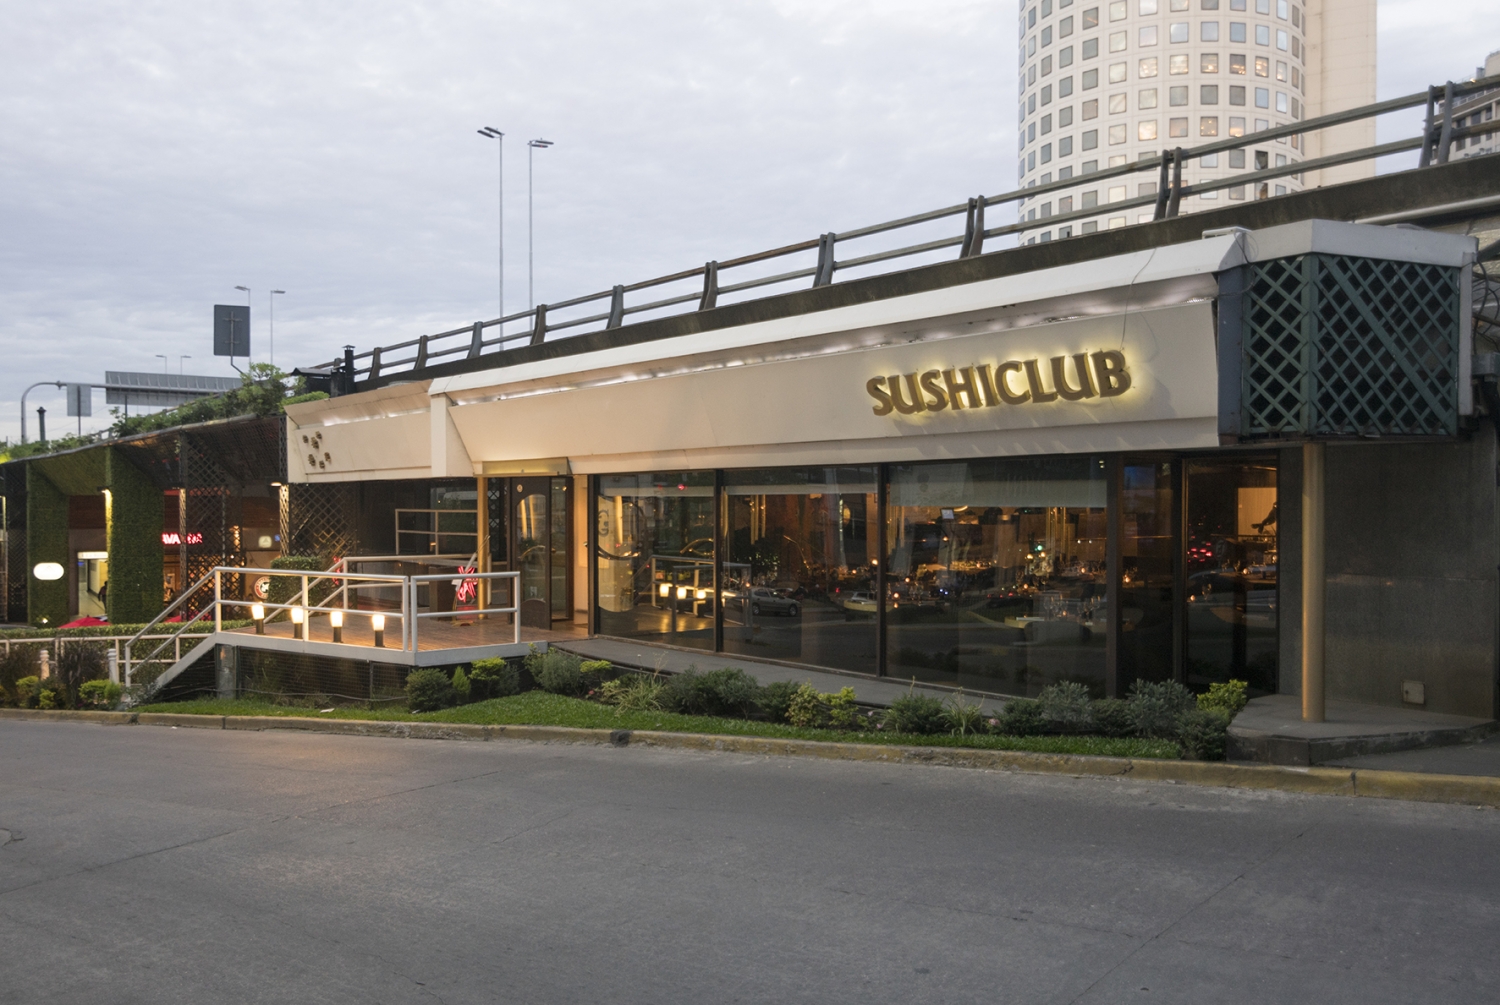 SushiClub